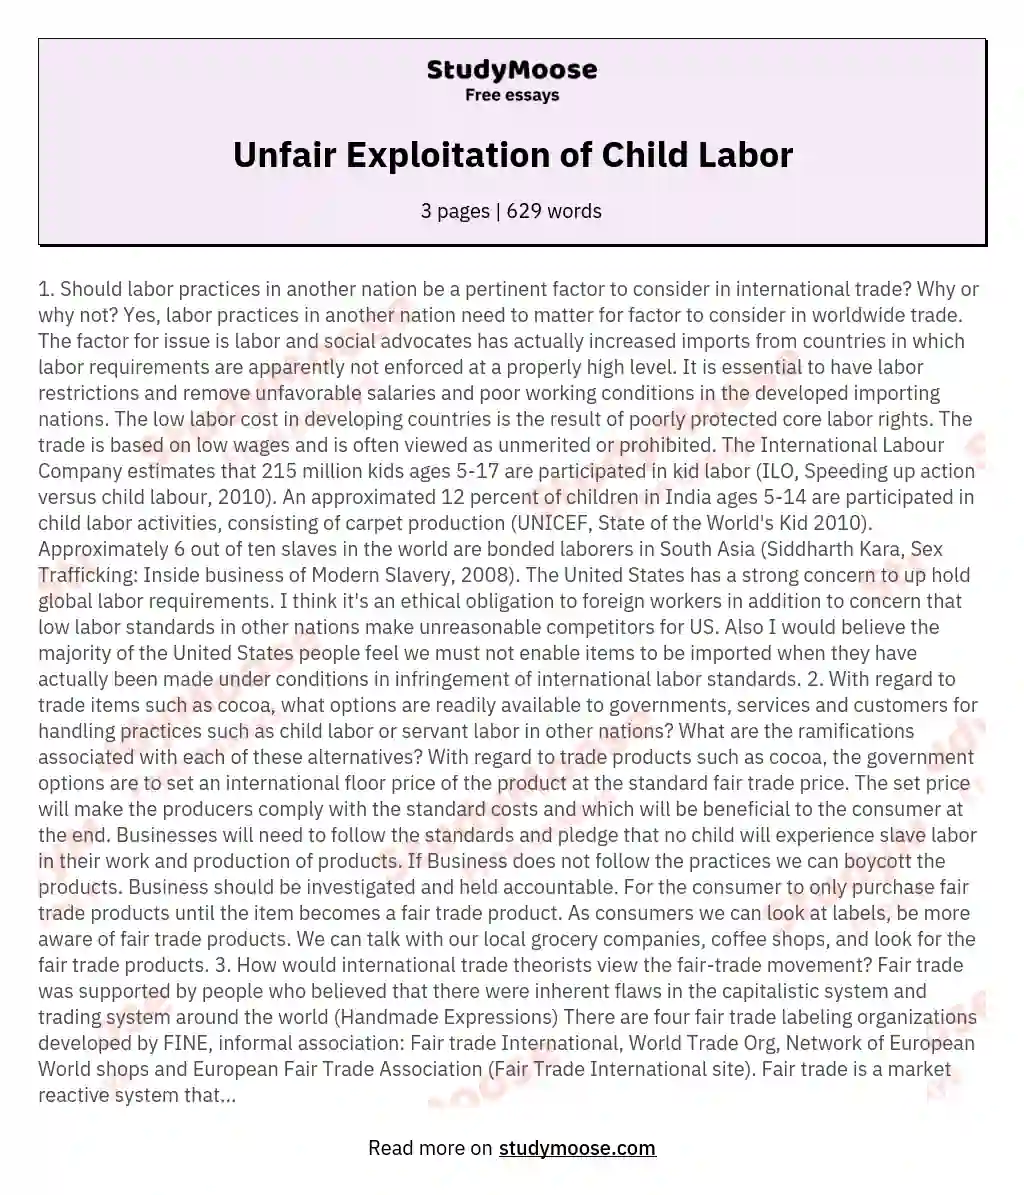 Unfair Exploitation of Child Labor